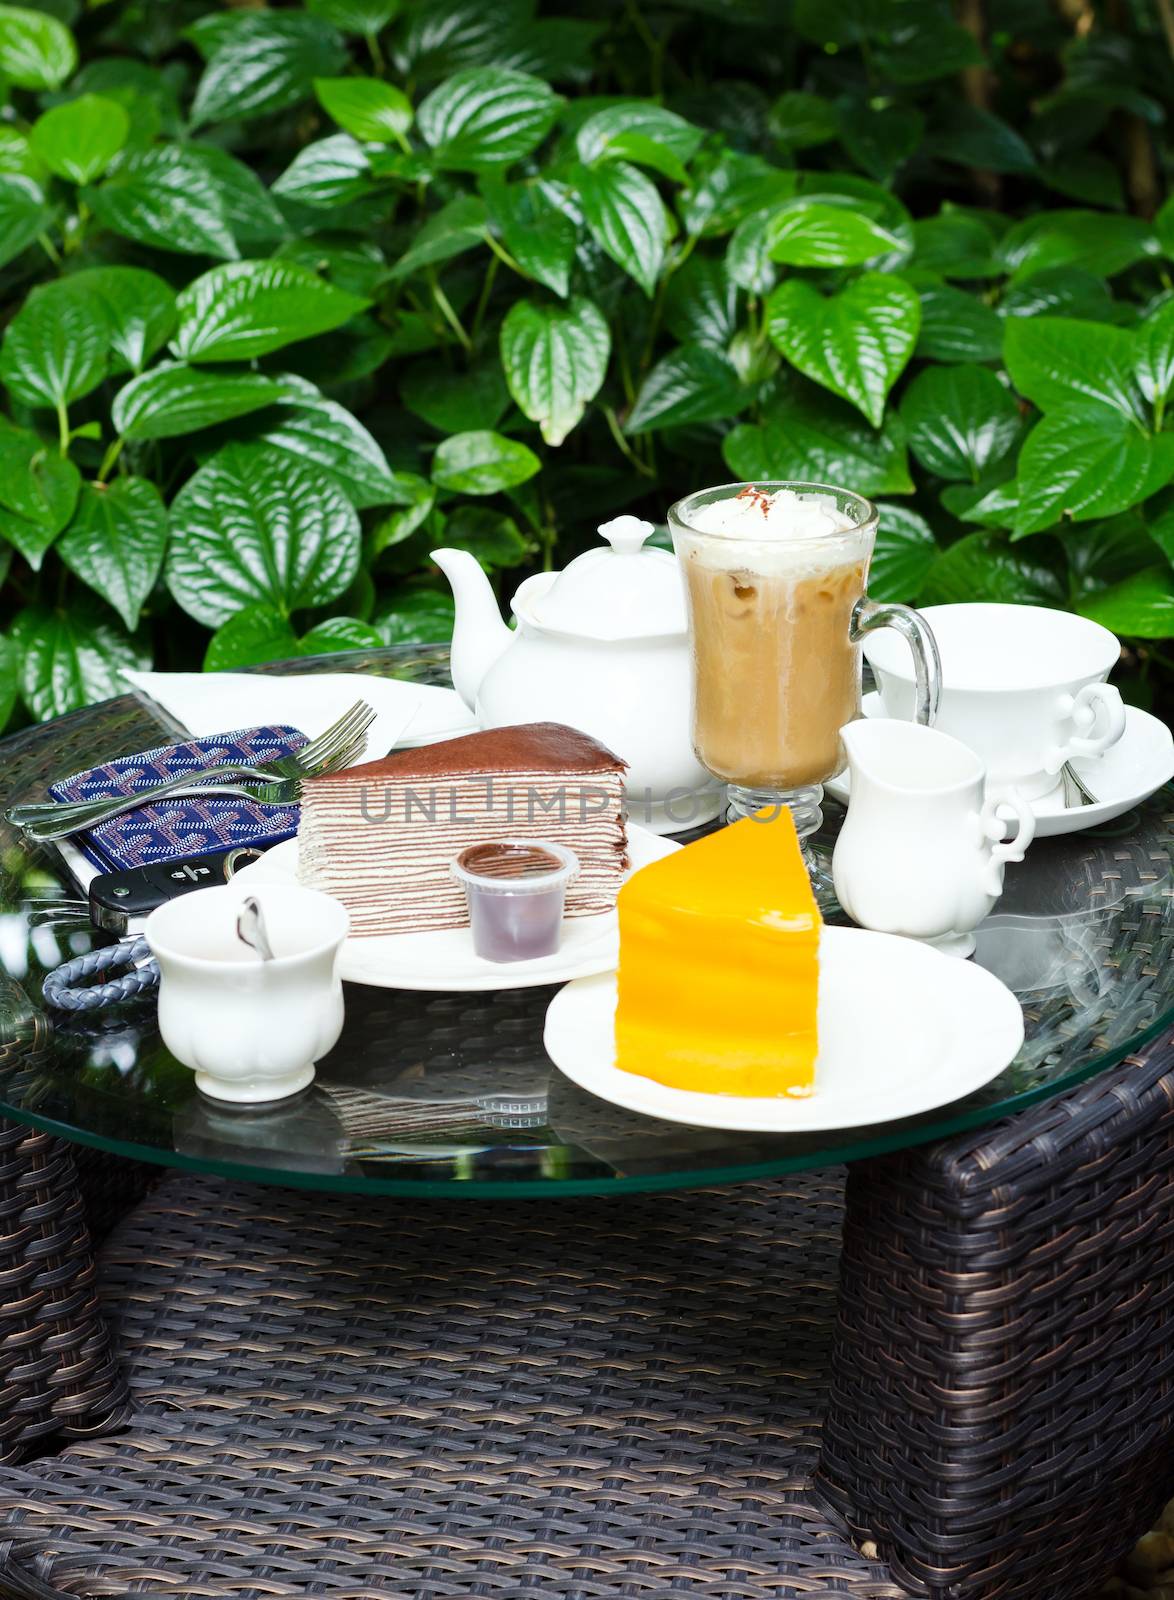 Coffee, tea, chocolate crape cake and orange cake on table in garden